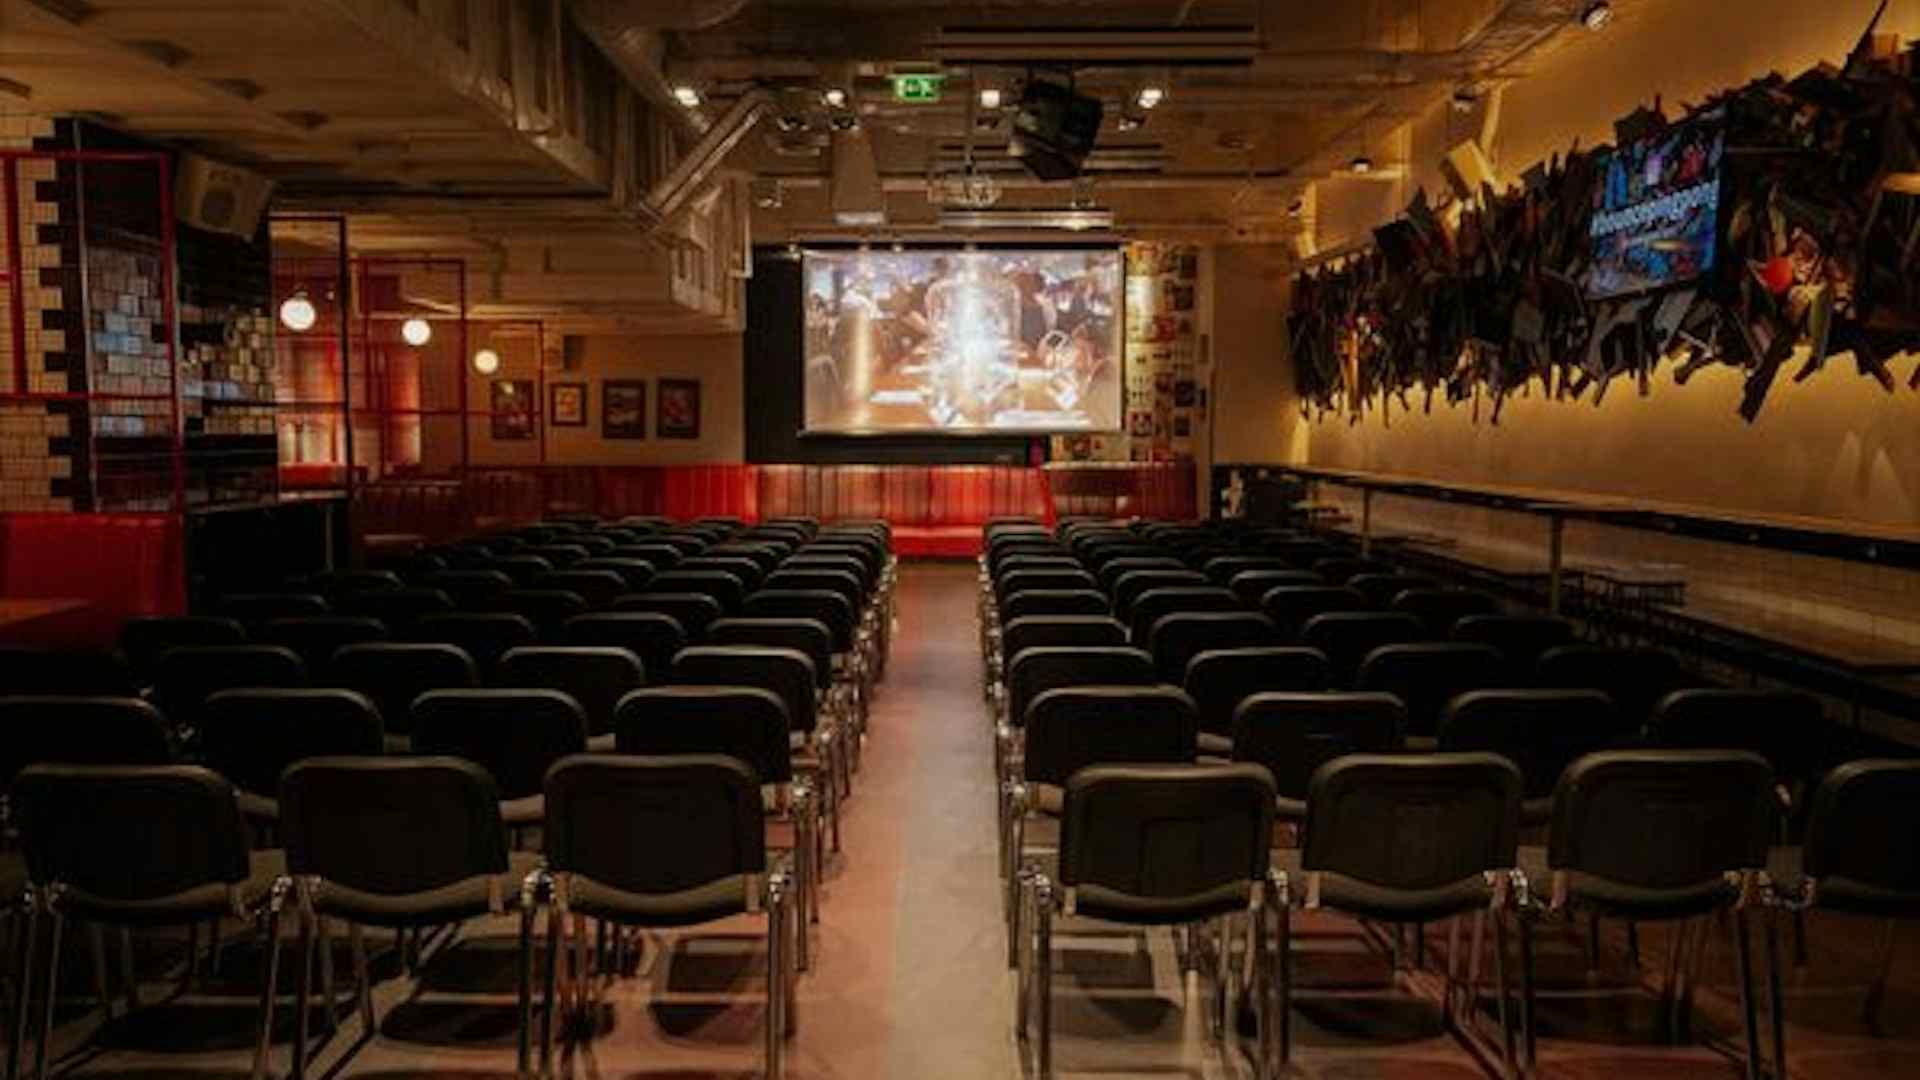 Meet the Team at London's Most Unique Conference Venue